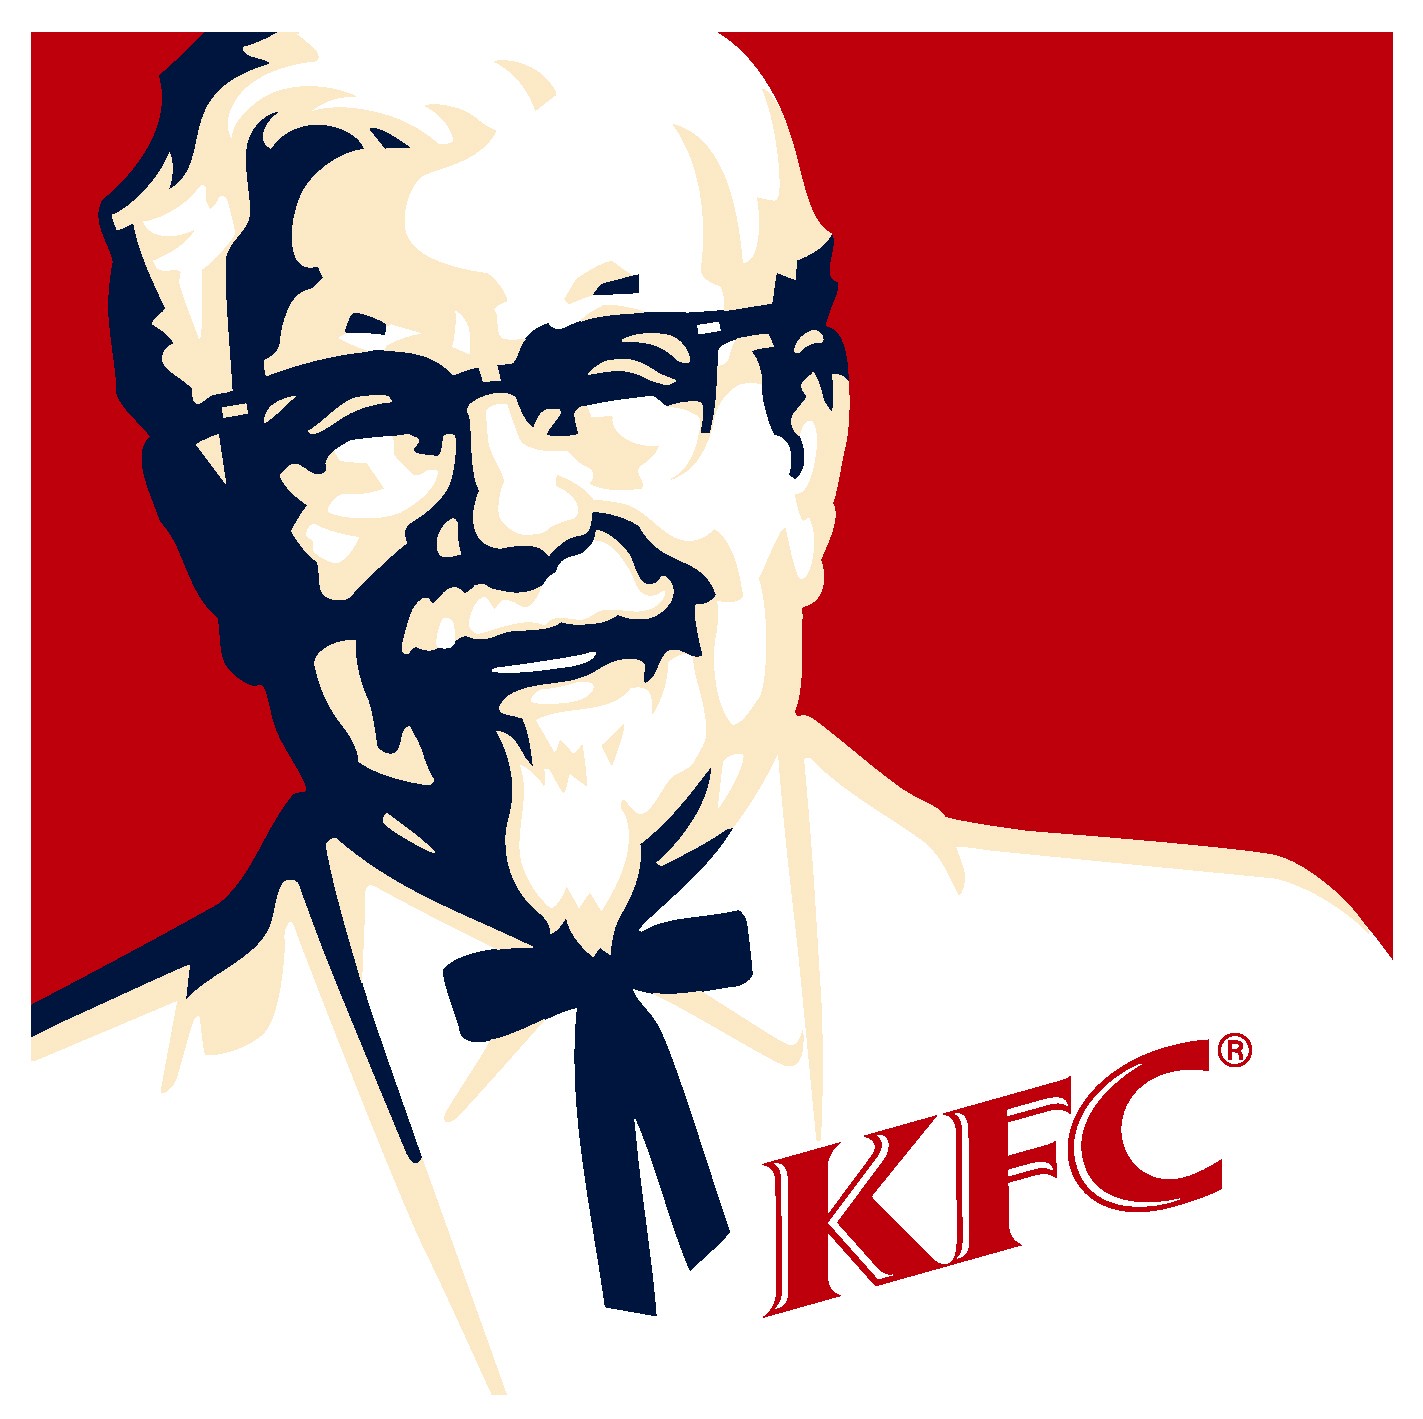 Kentucky Fried Chicken ケンタッキーフライドチキン ロゴマーク Logomark Mania 世界のかわいいロゴ マーク集 企業ロゴ ブランドロゴ